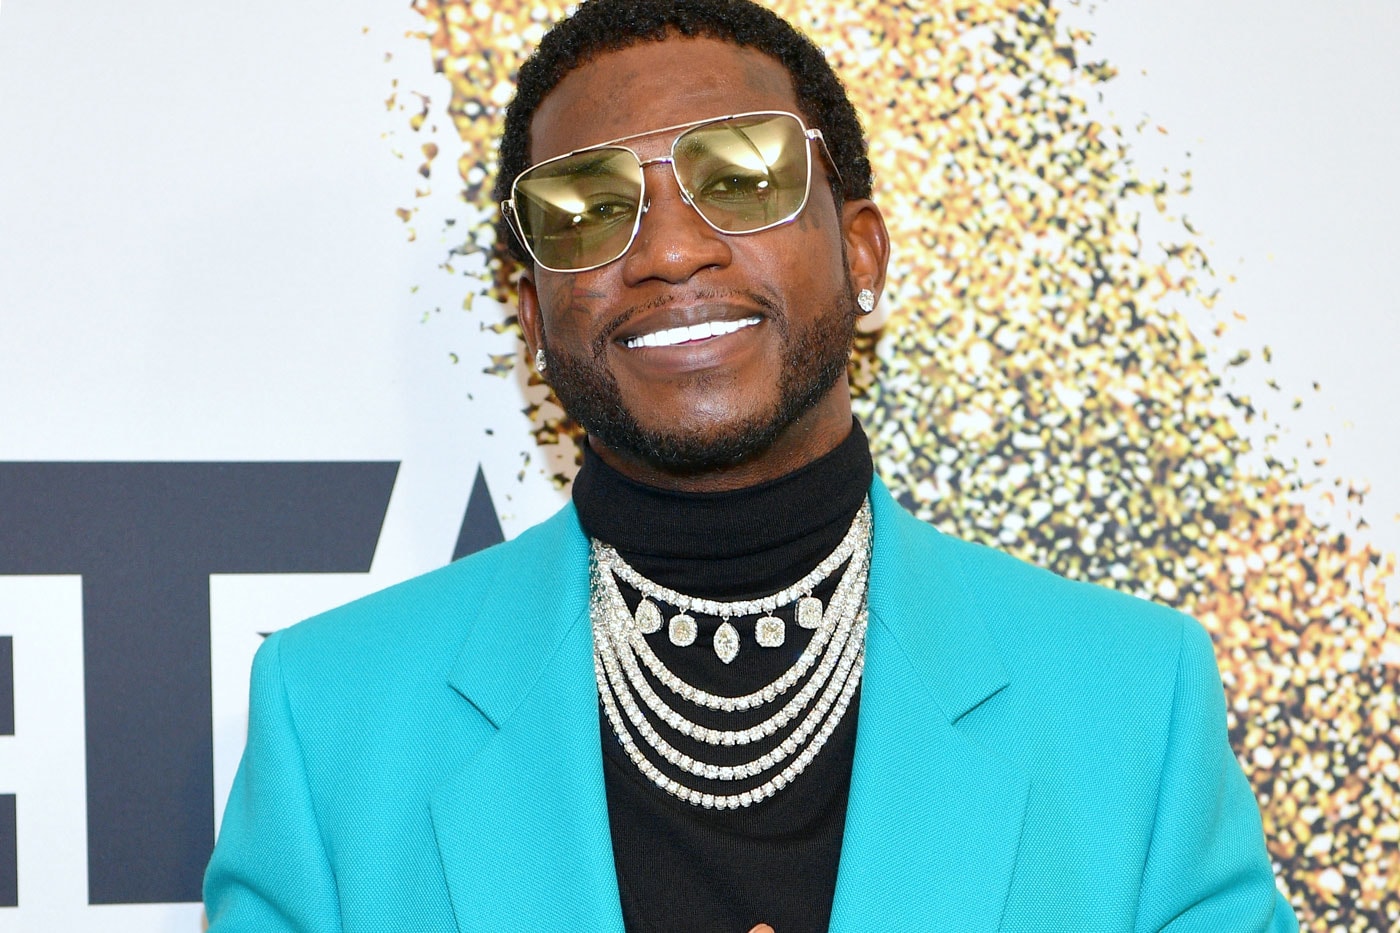 Gucci Mane Promotes Oral Hygiene in Apple Music Video East Atlanta Santa